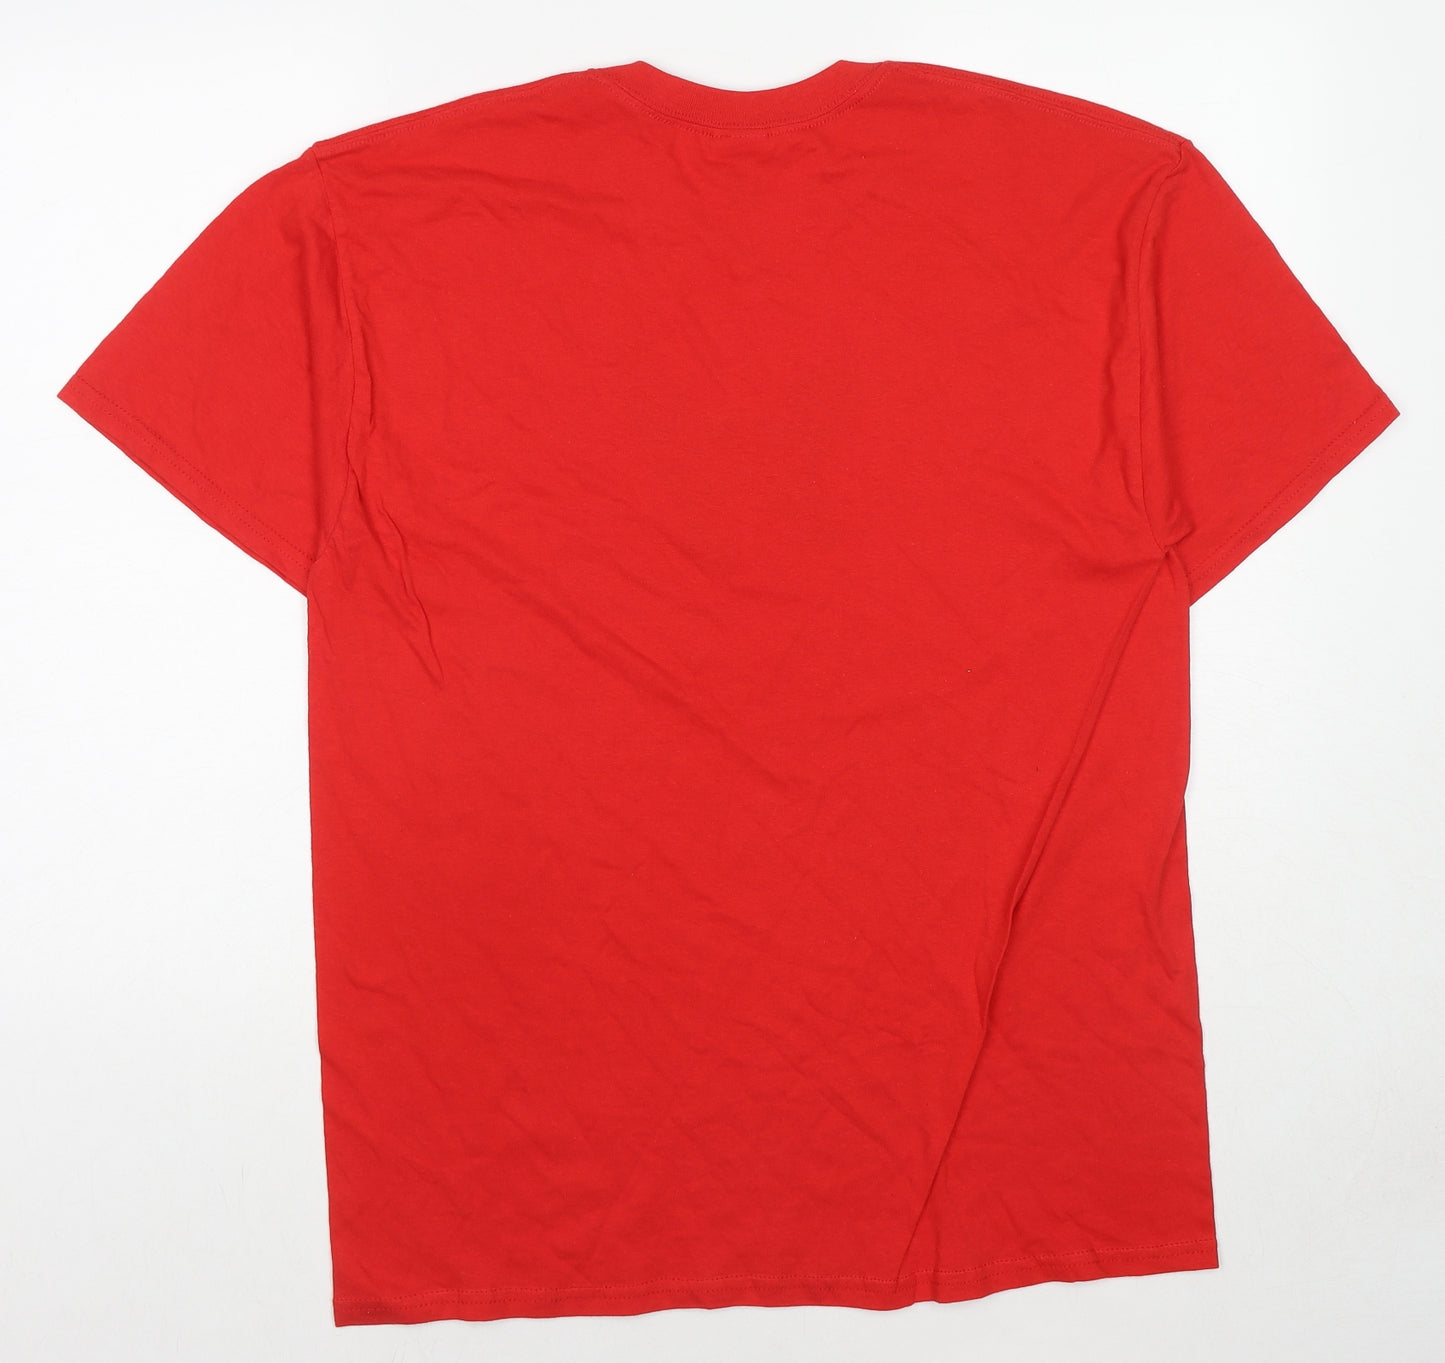 Gildan Womens Red Cotton Basic T-Shirt Size L Round Neck - Lamb Banana